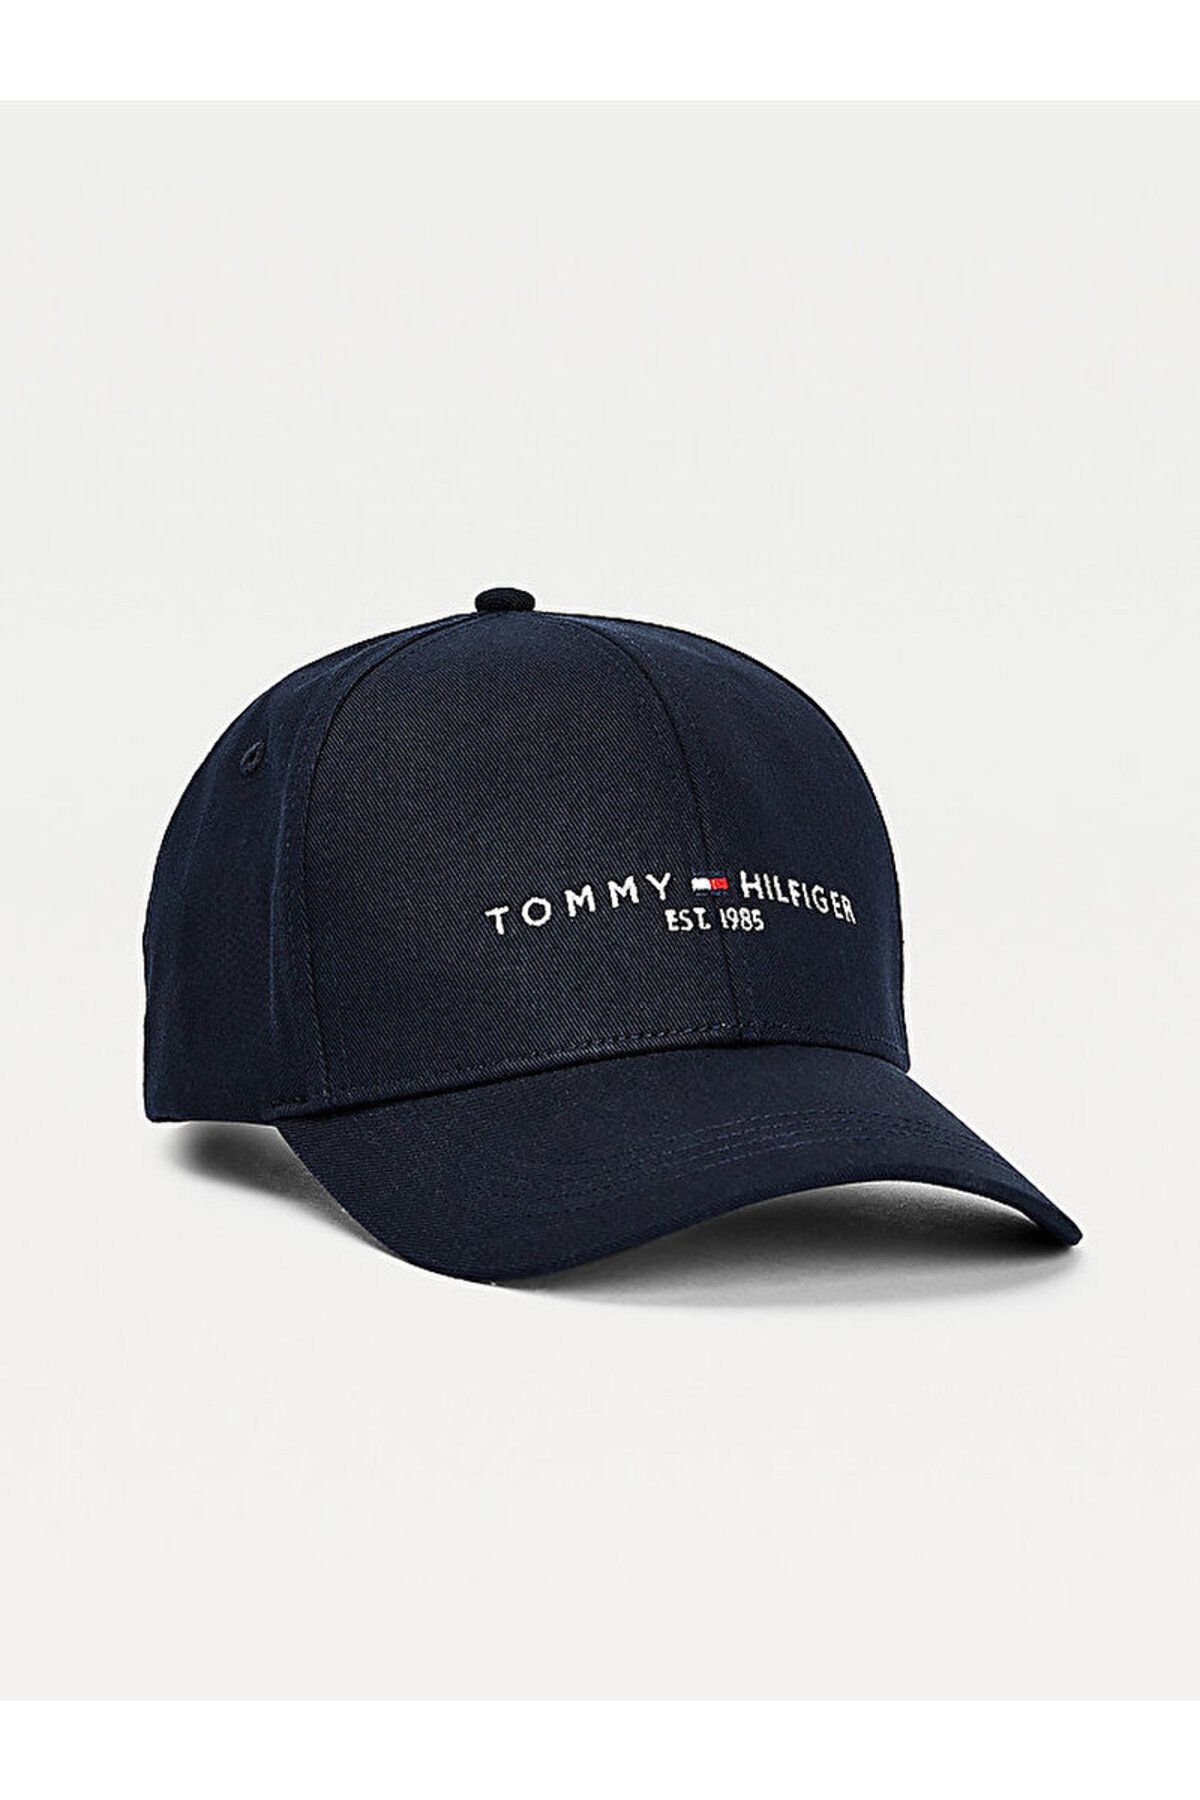 Tommy Hilfiger Erkek 1985 Logolu Organik Pamuklu Lacivert Spor Şapka Am0am07352-dw5